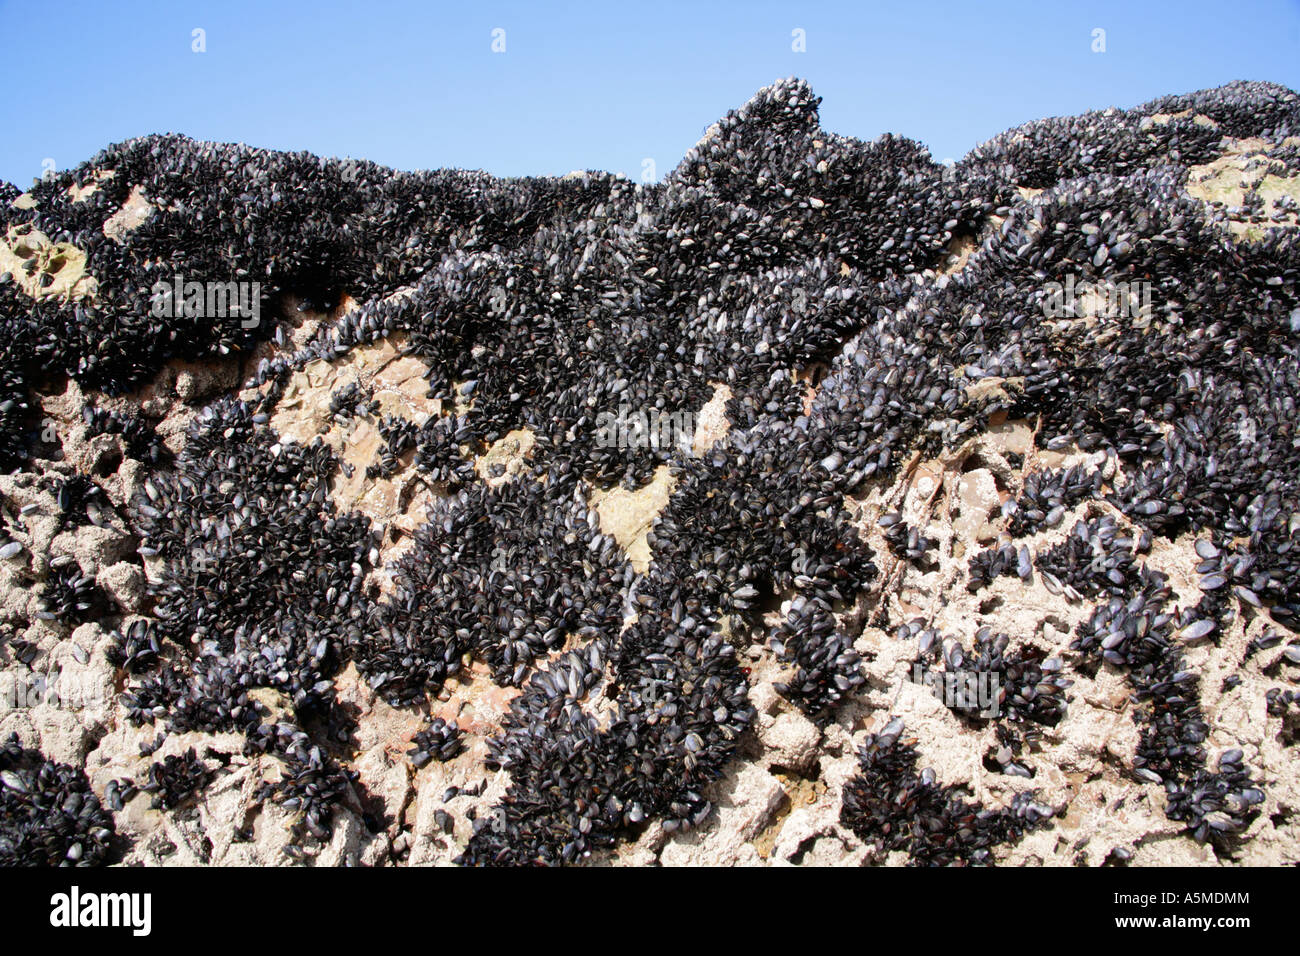 Common edible mussel, Mytilus Edulis clinging to rocks on sea shore. Stock Photo